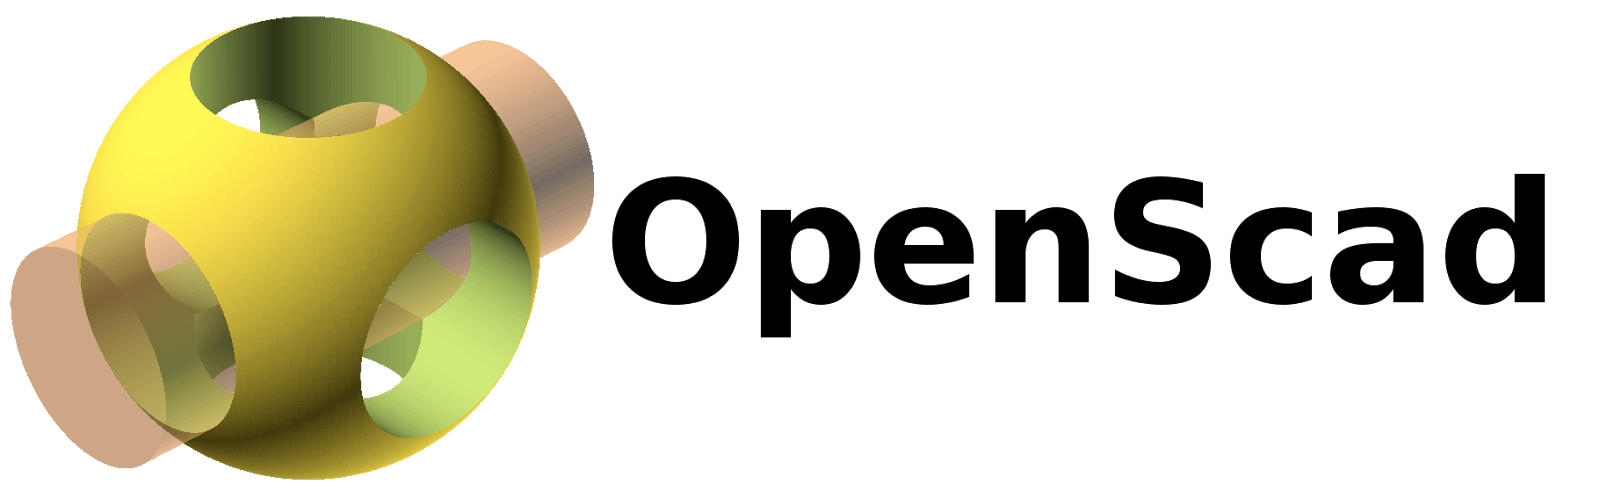 openscad-logo